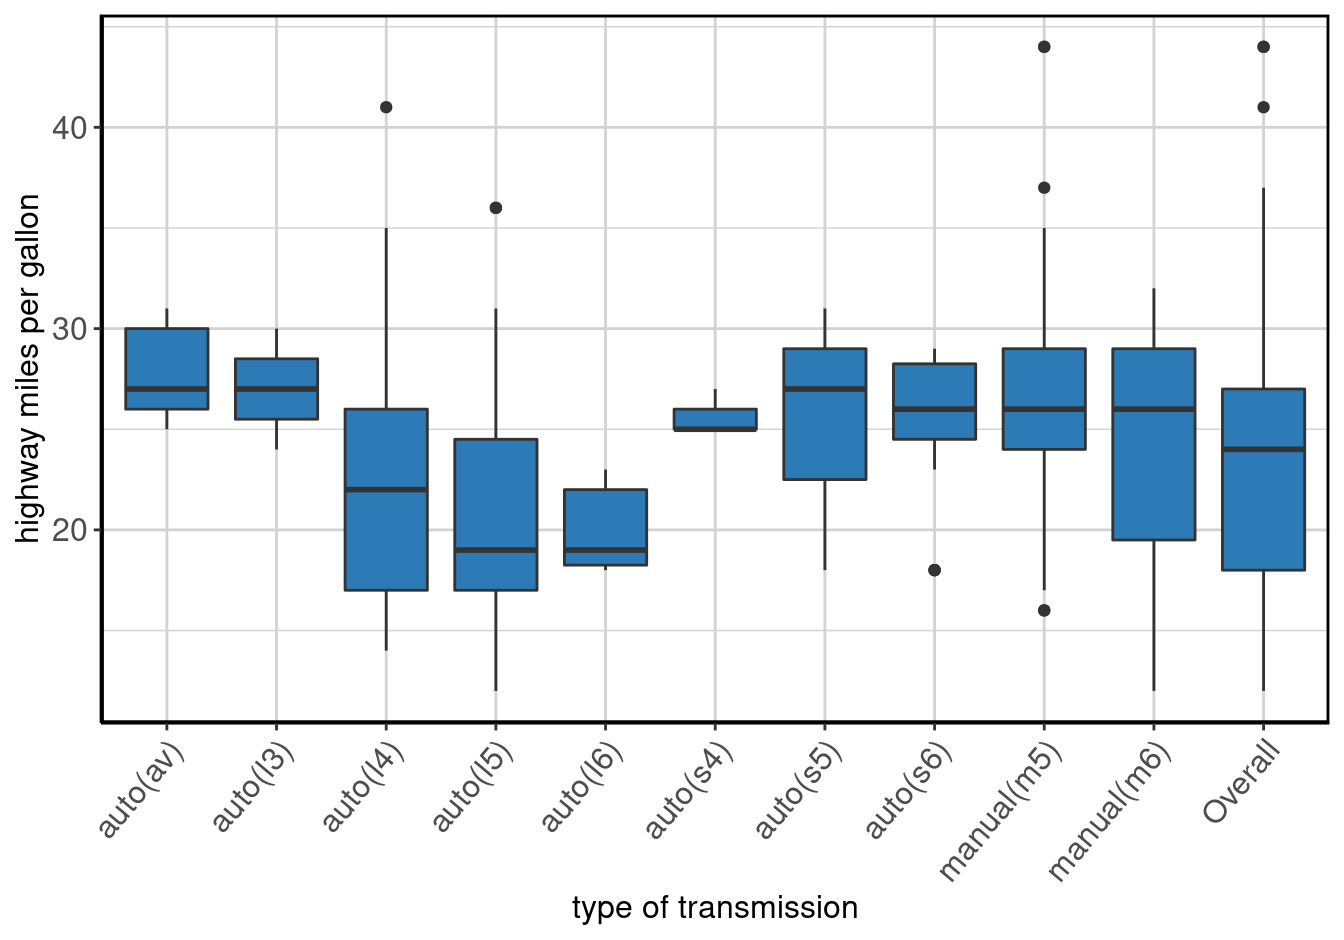 Boxplot of <b>highway miles per gallon</b> by <b>type of transmission</b>.